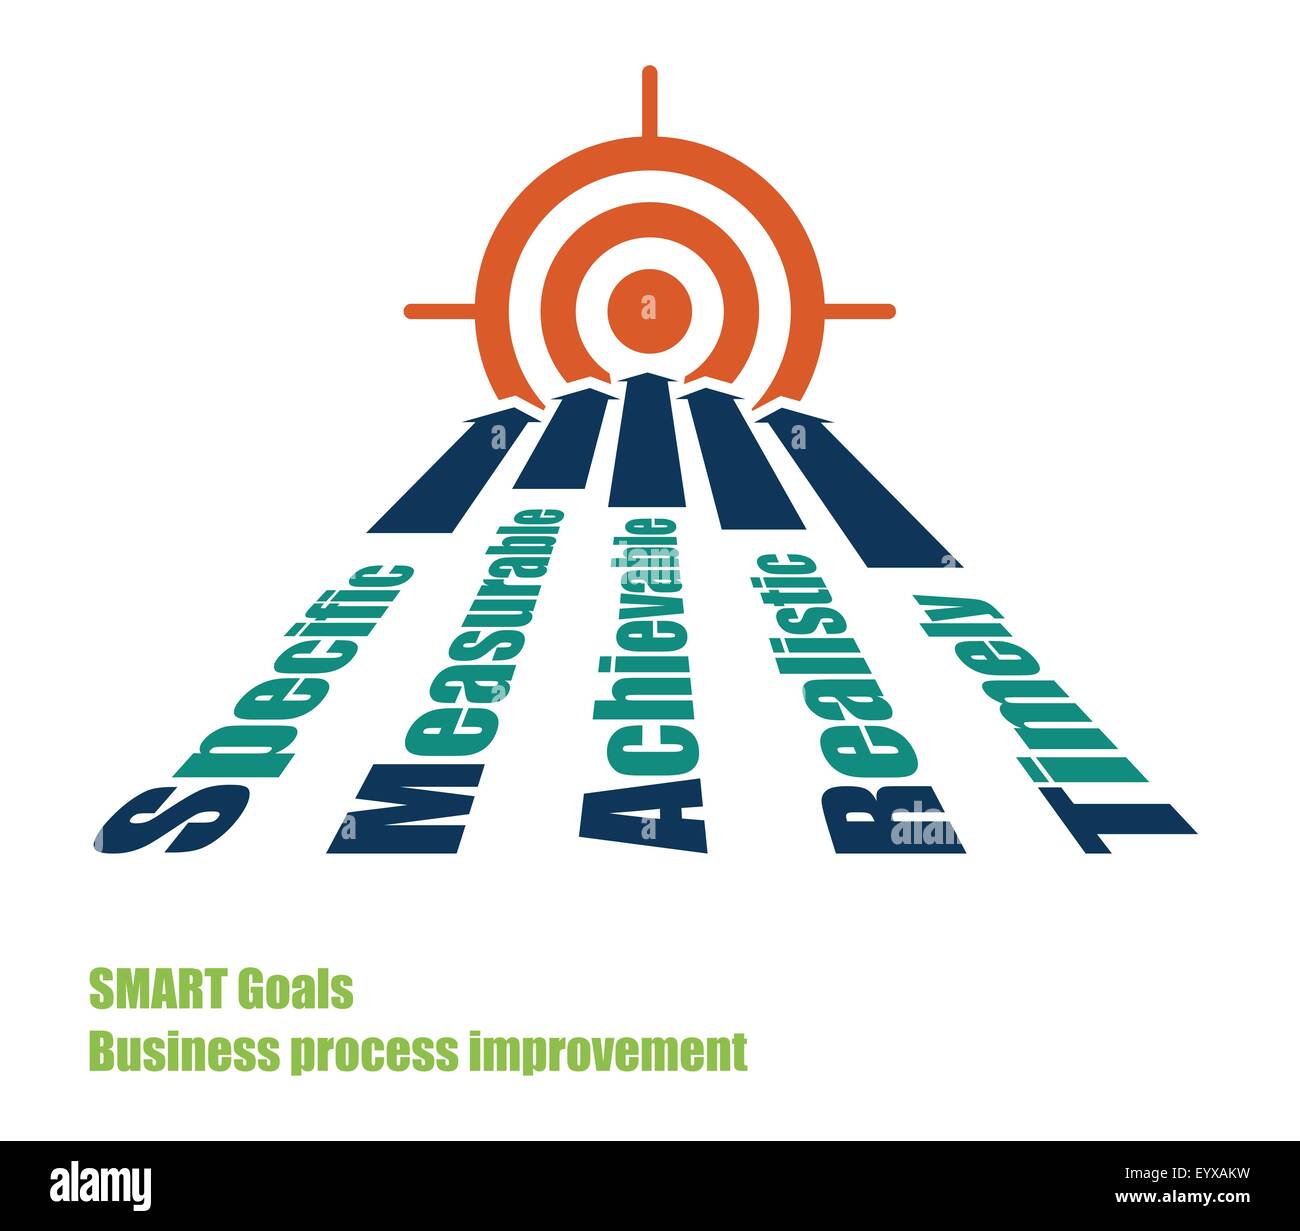 SMART goals improve business process vector illustration. Stock Vector